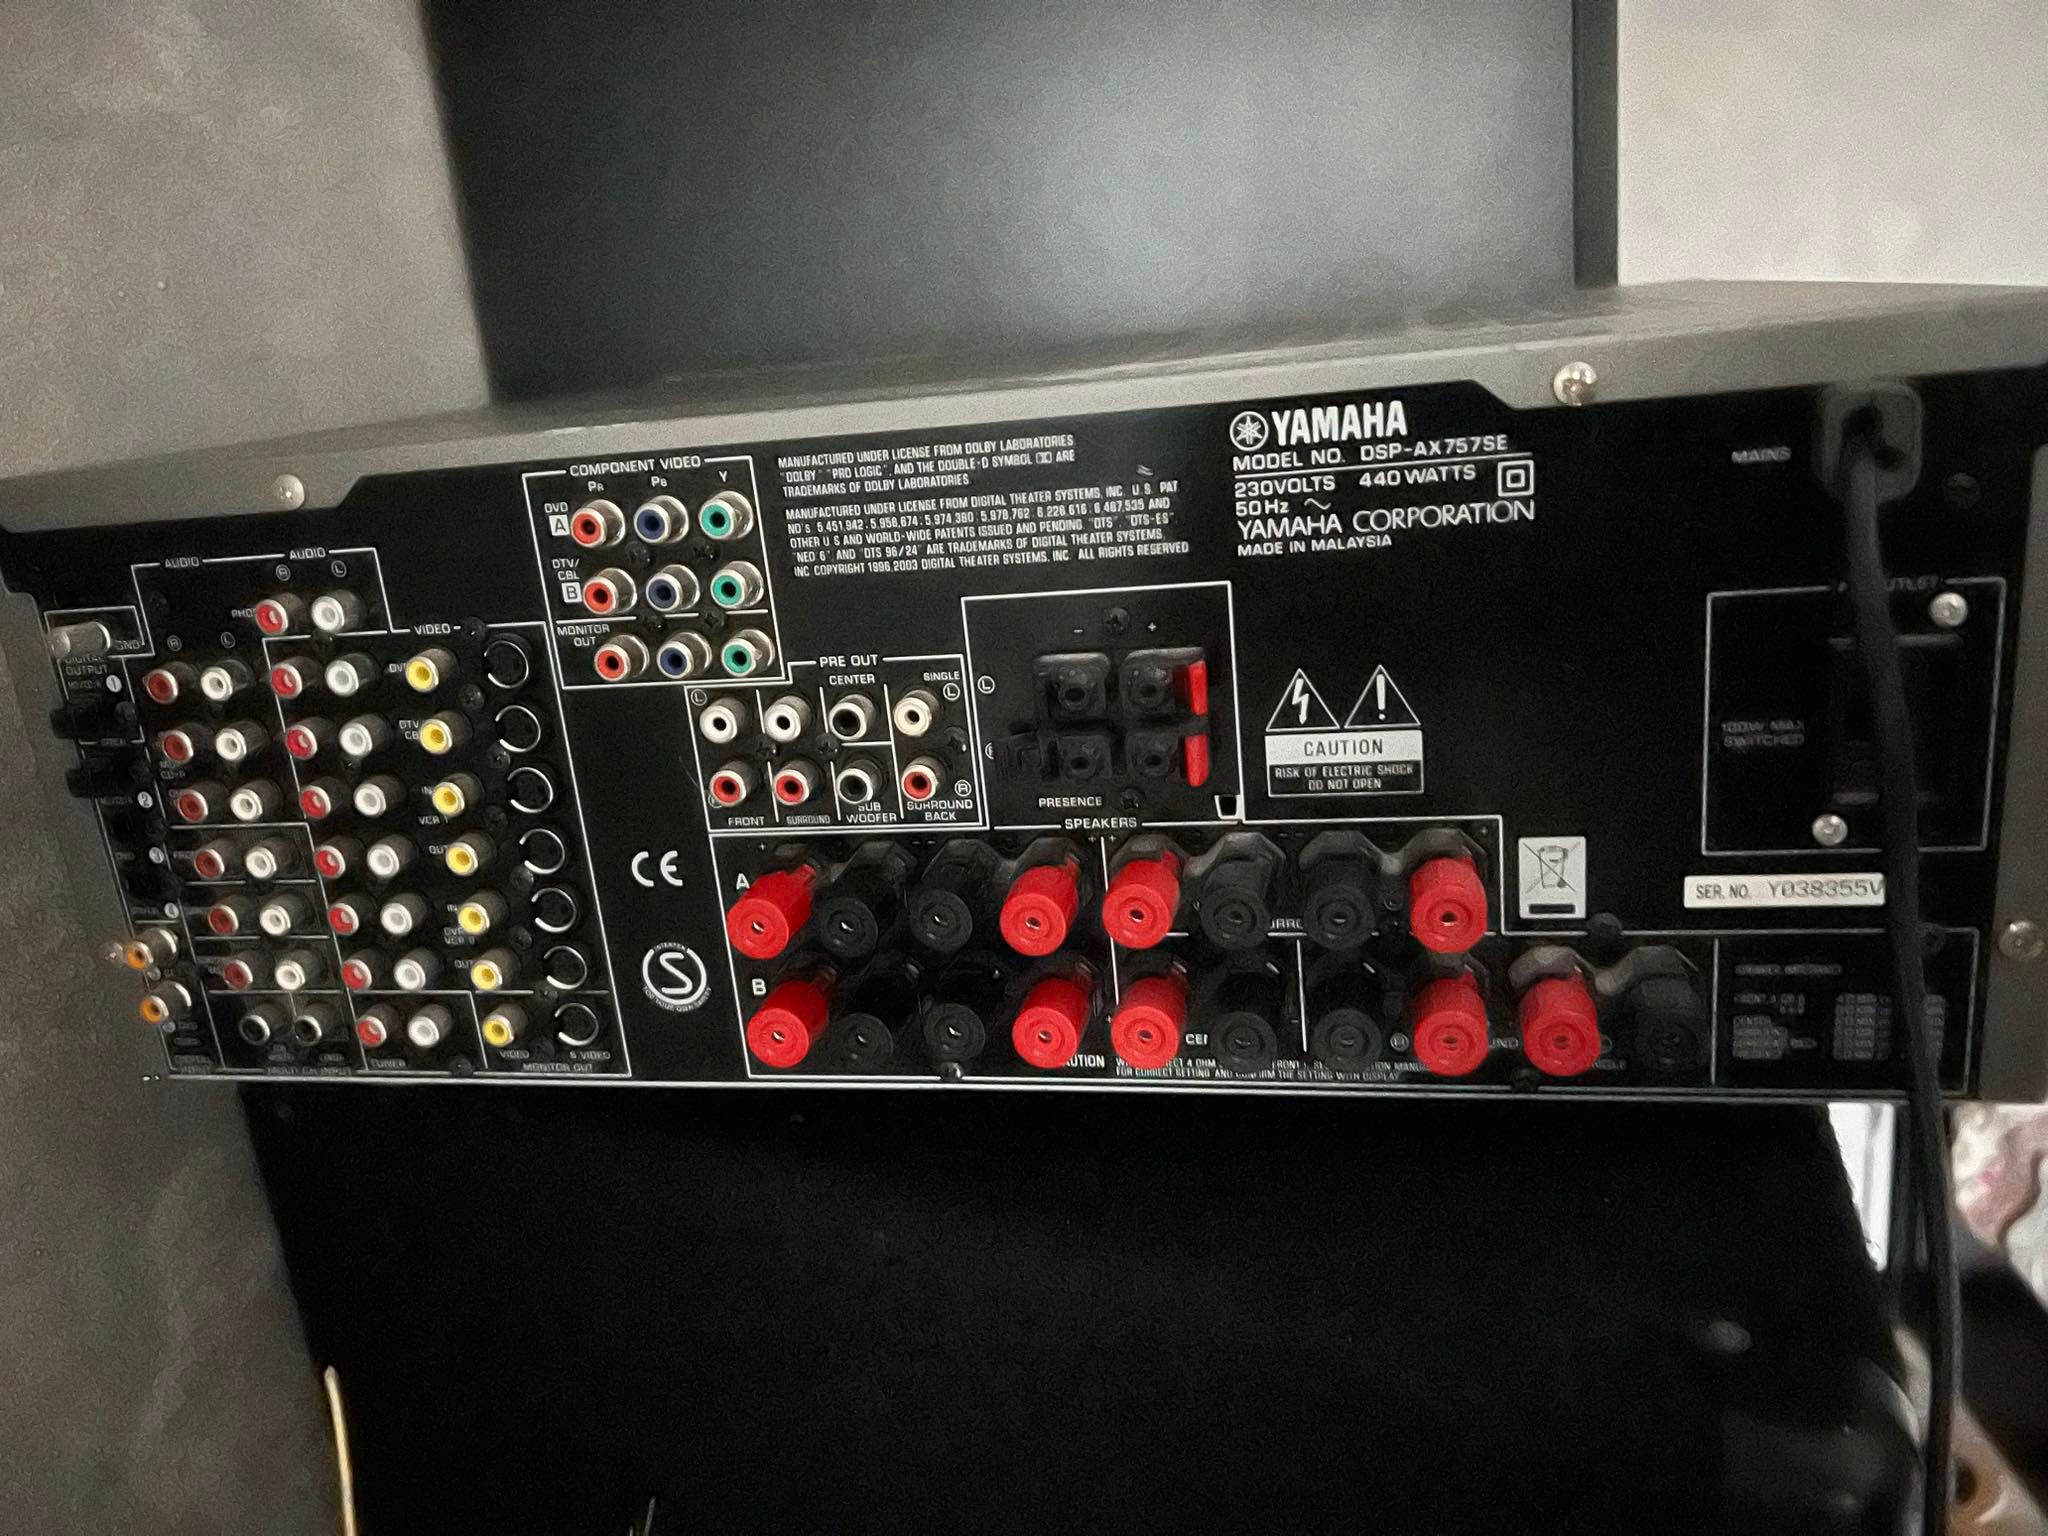 Yamaha DSP-AX757SE